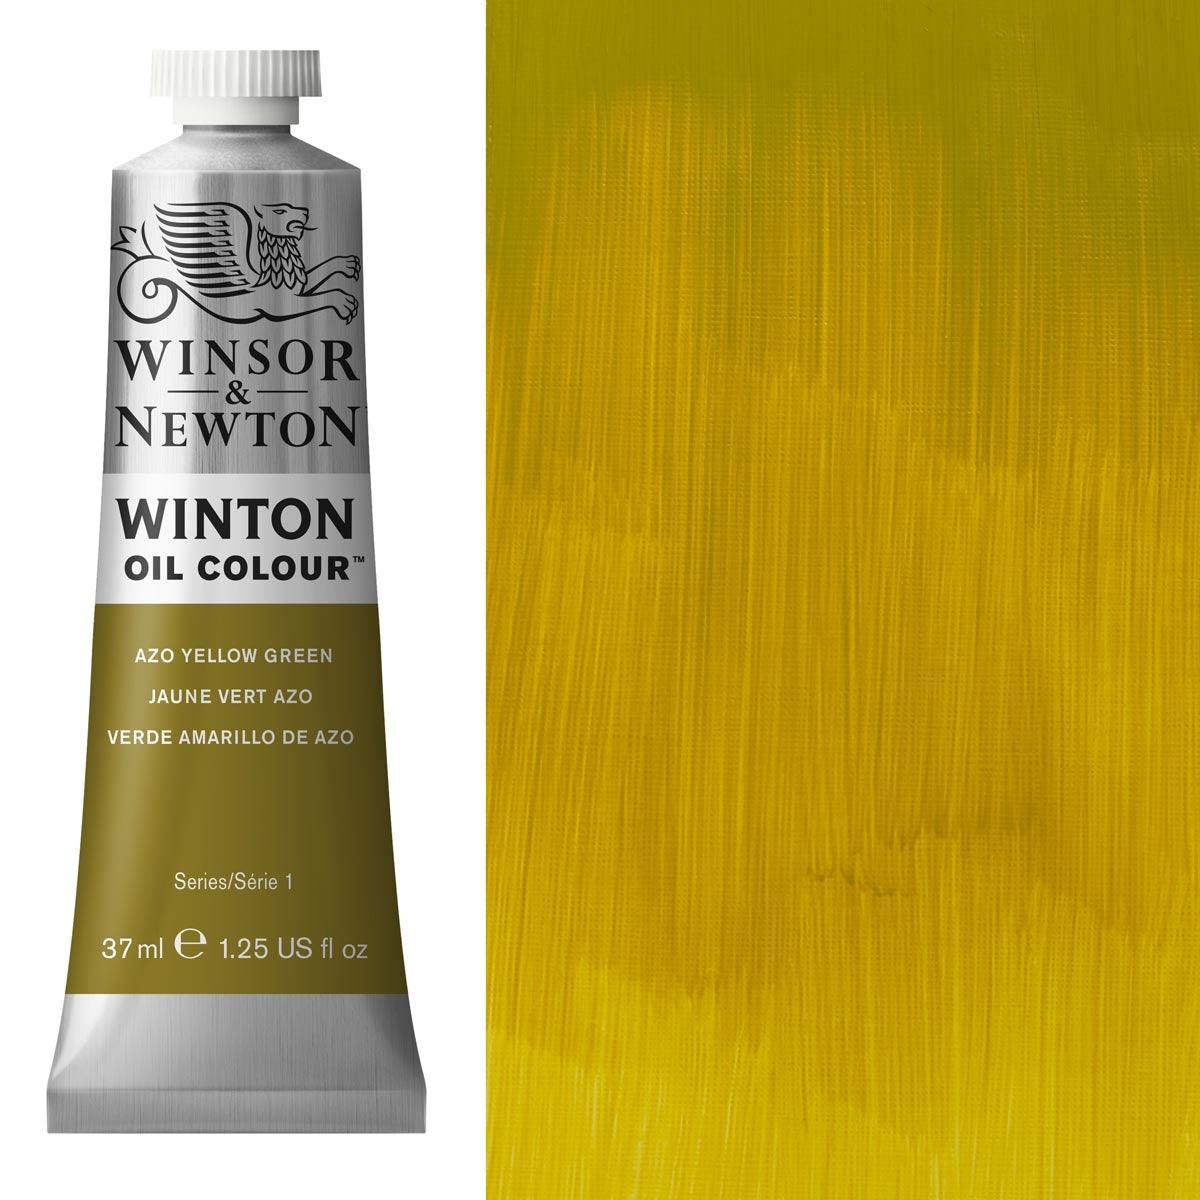 Winsor and Newton - Winton Oil Colour - 37ml - Azo Yellow Green